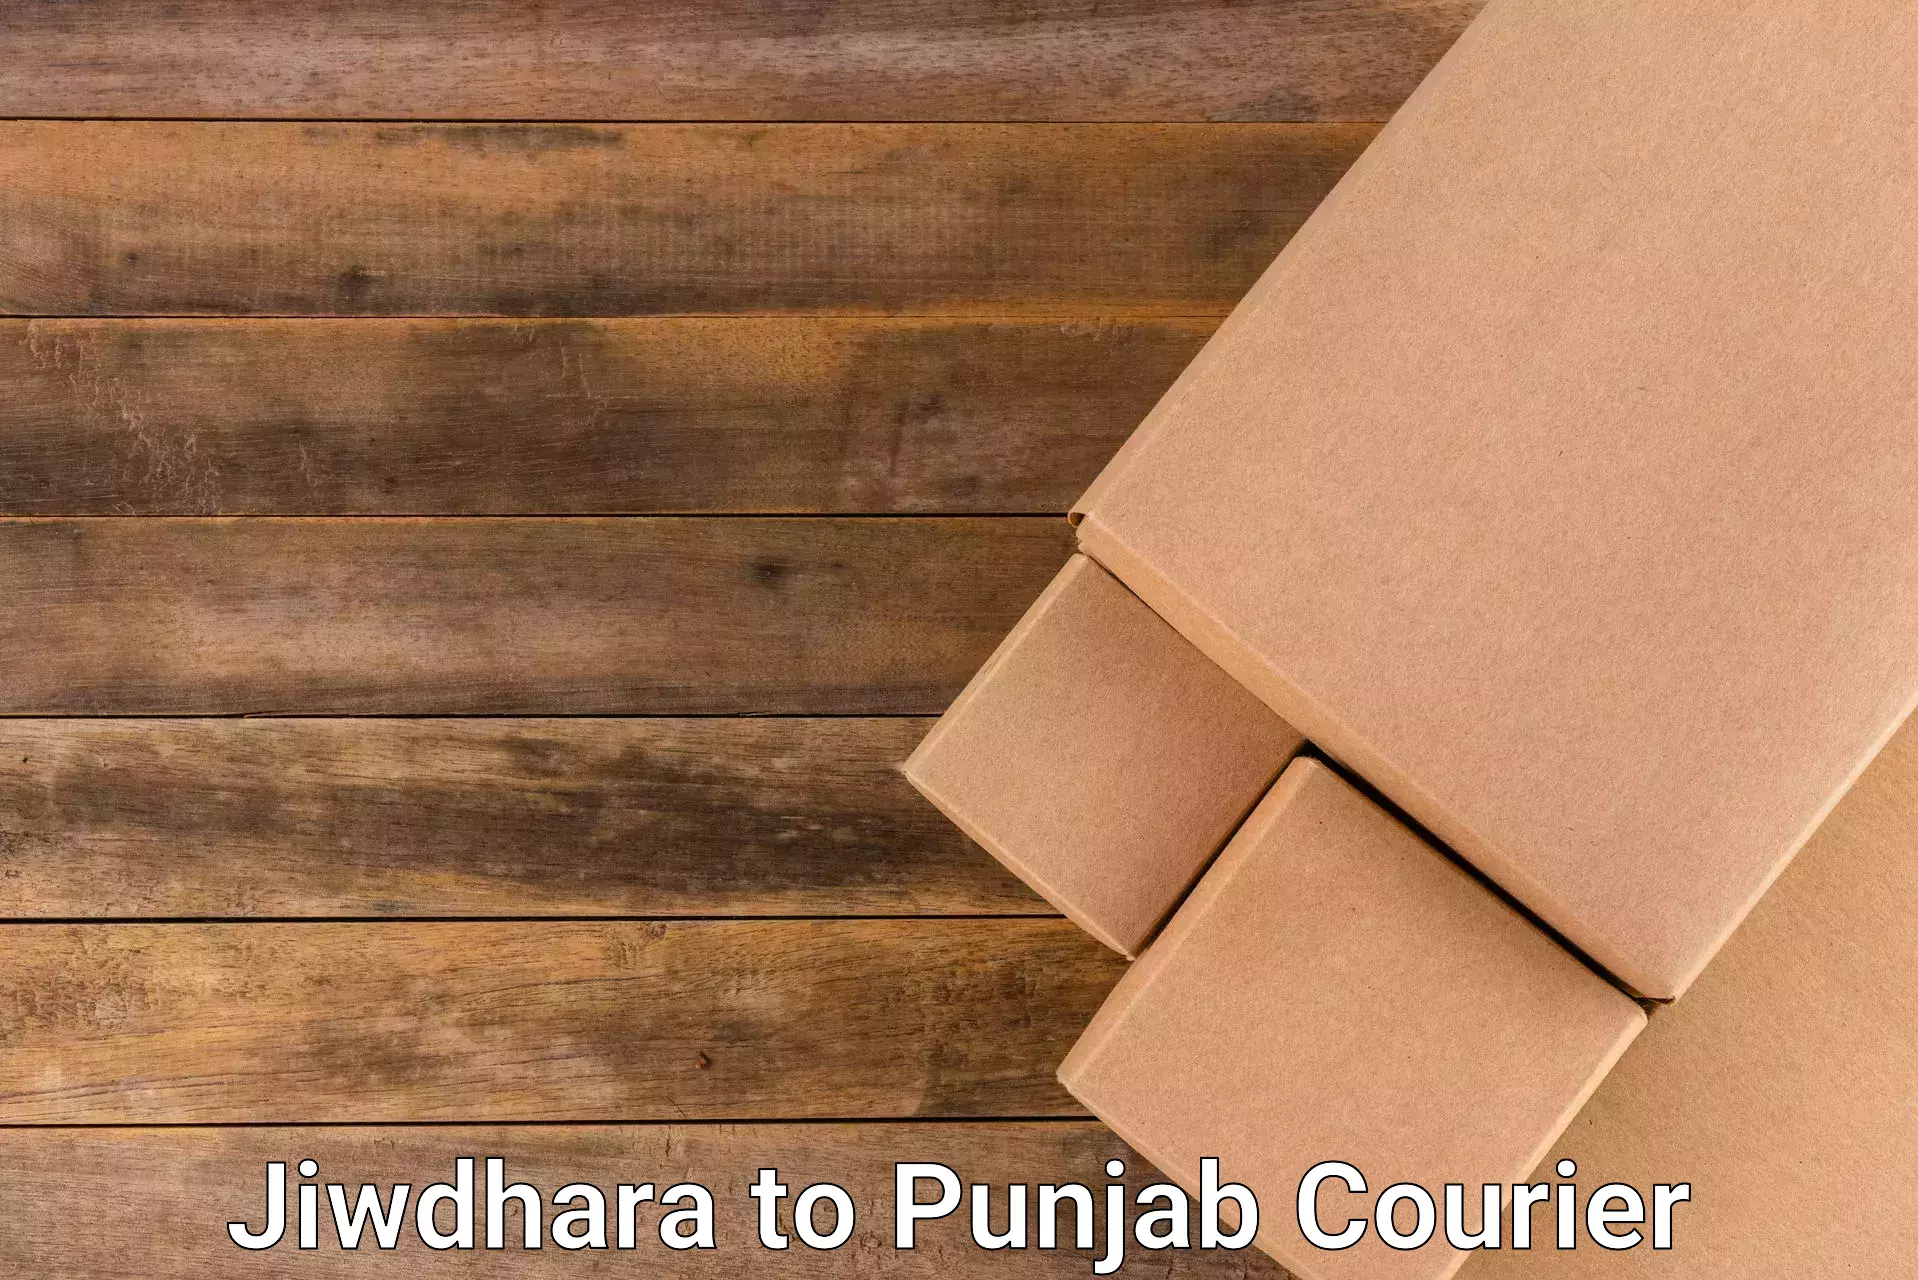 Heavy parcel delivery in Jiwdhara to Jalandhar